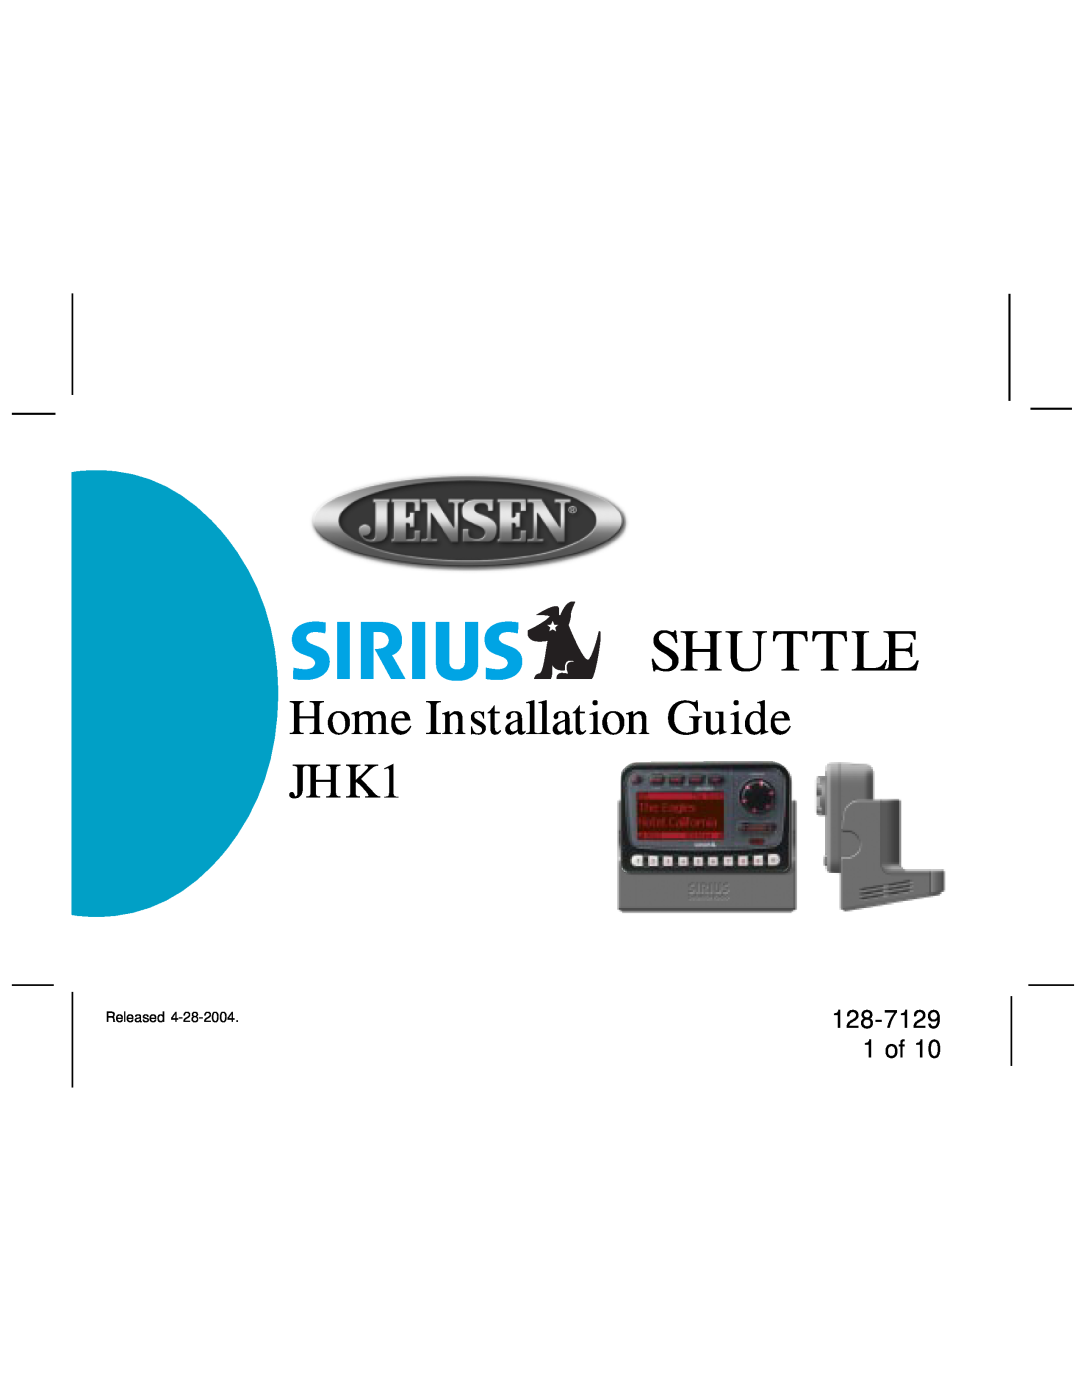 Sirius Satellite Radio manual 128-7129 1 of, Shuttle, Home Installation Guide JHK1, Released 